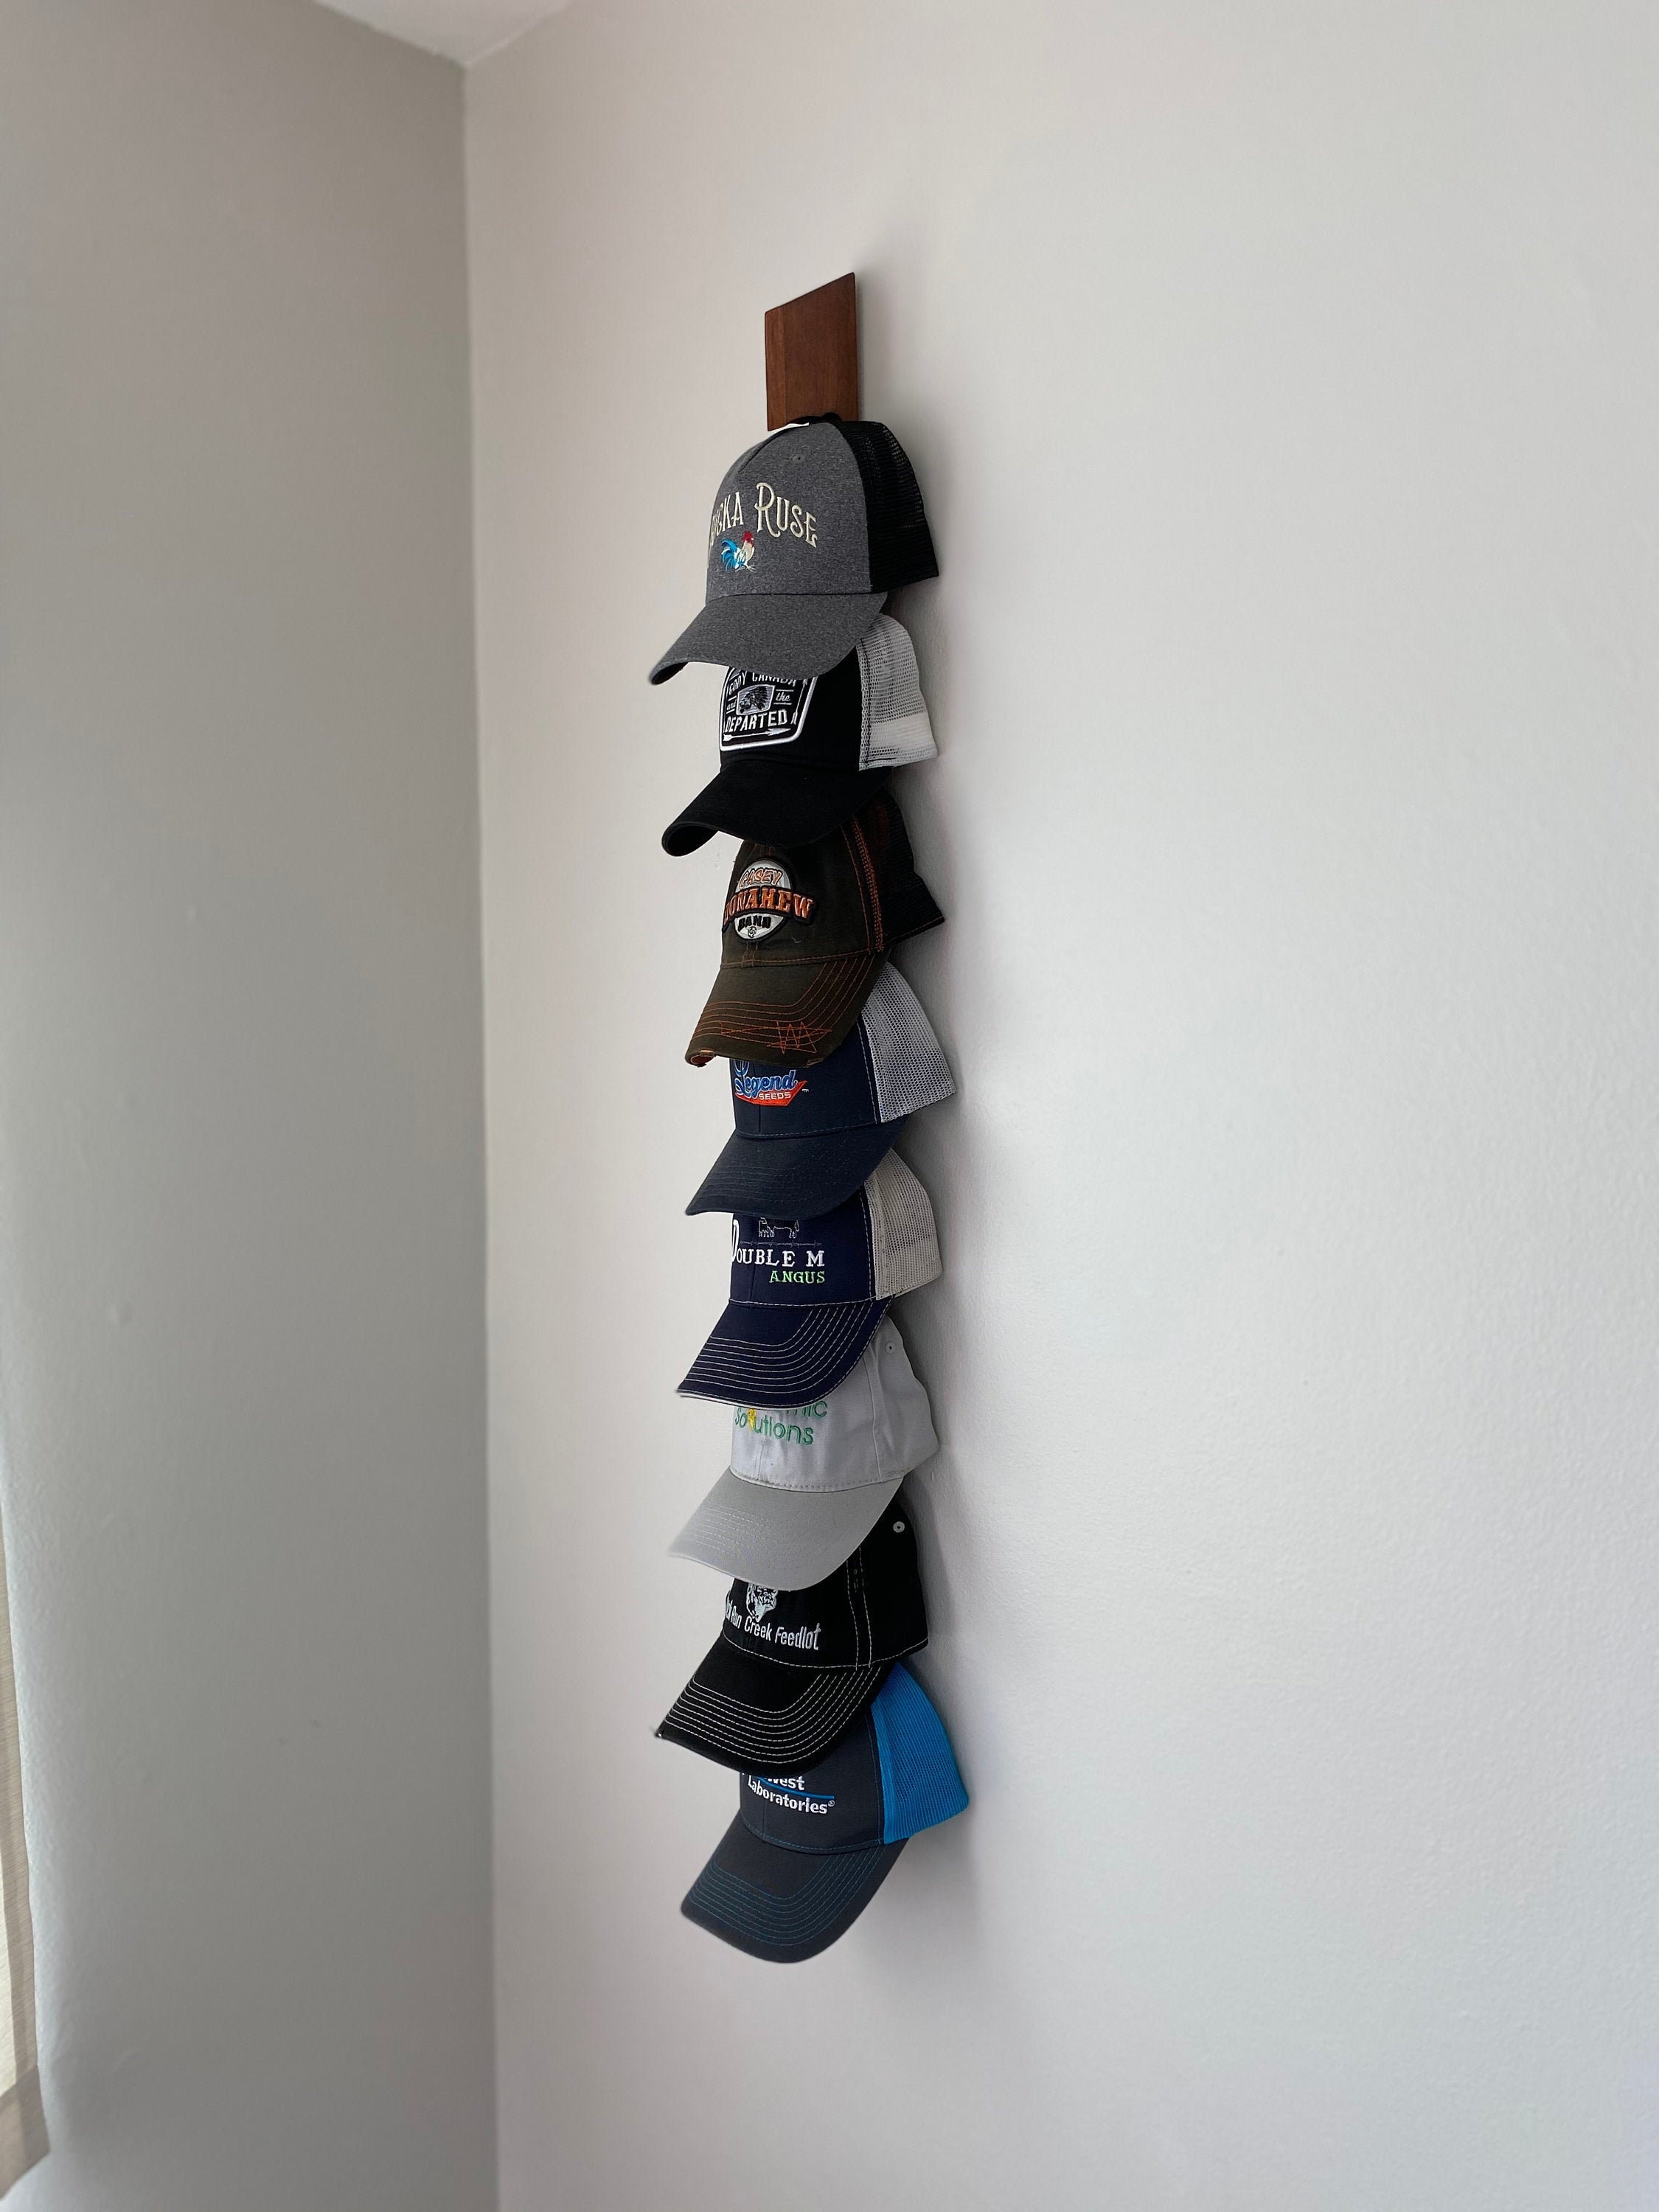 Vertical Hat Storage Wall Hooks